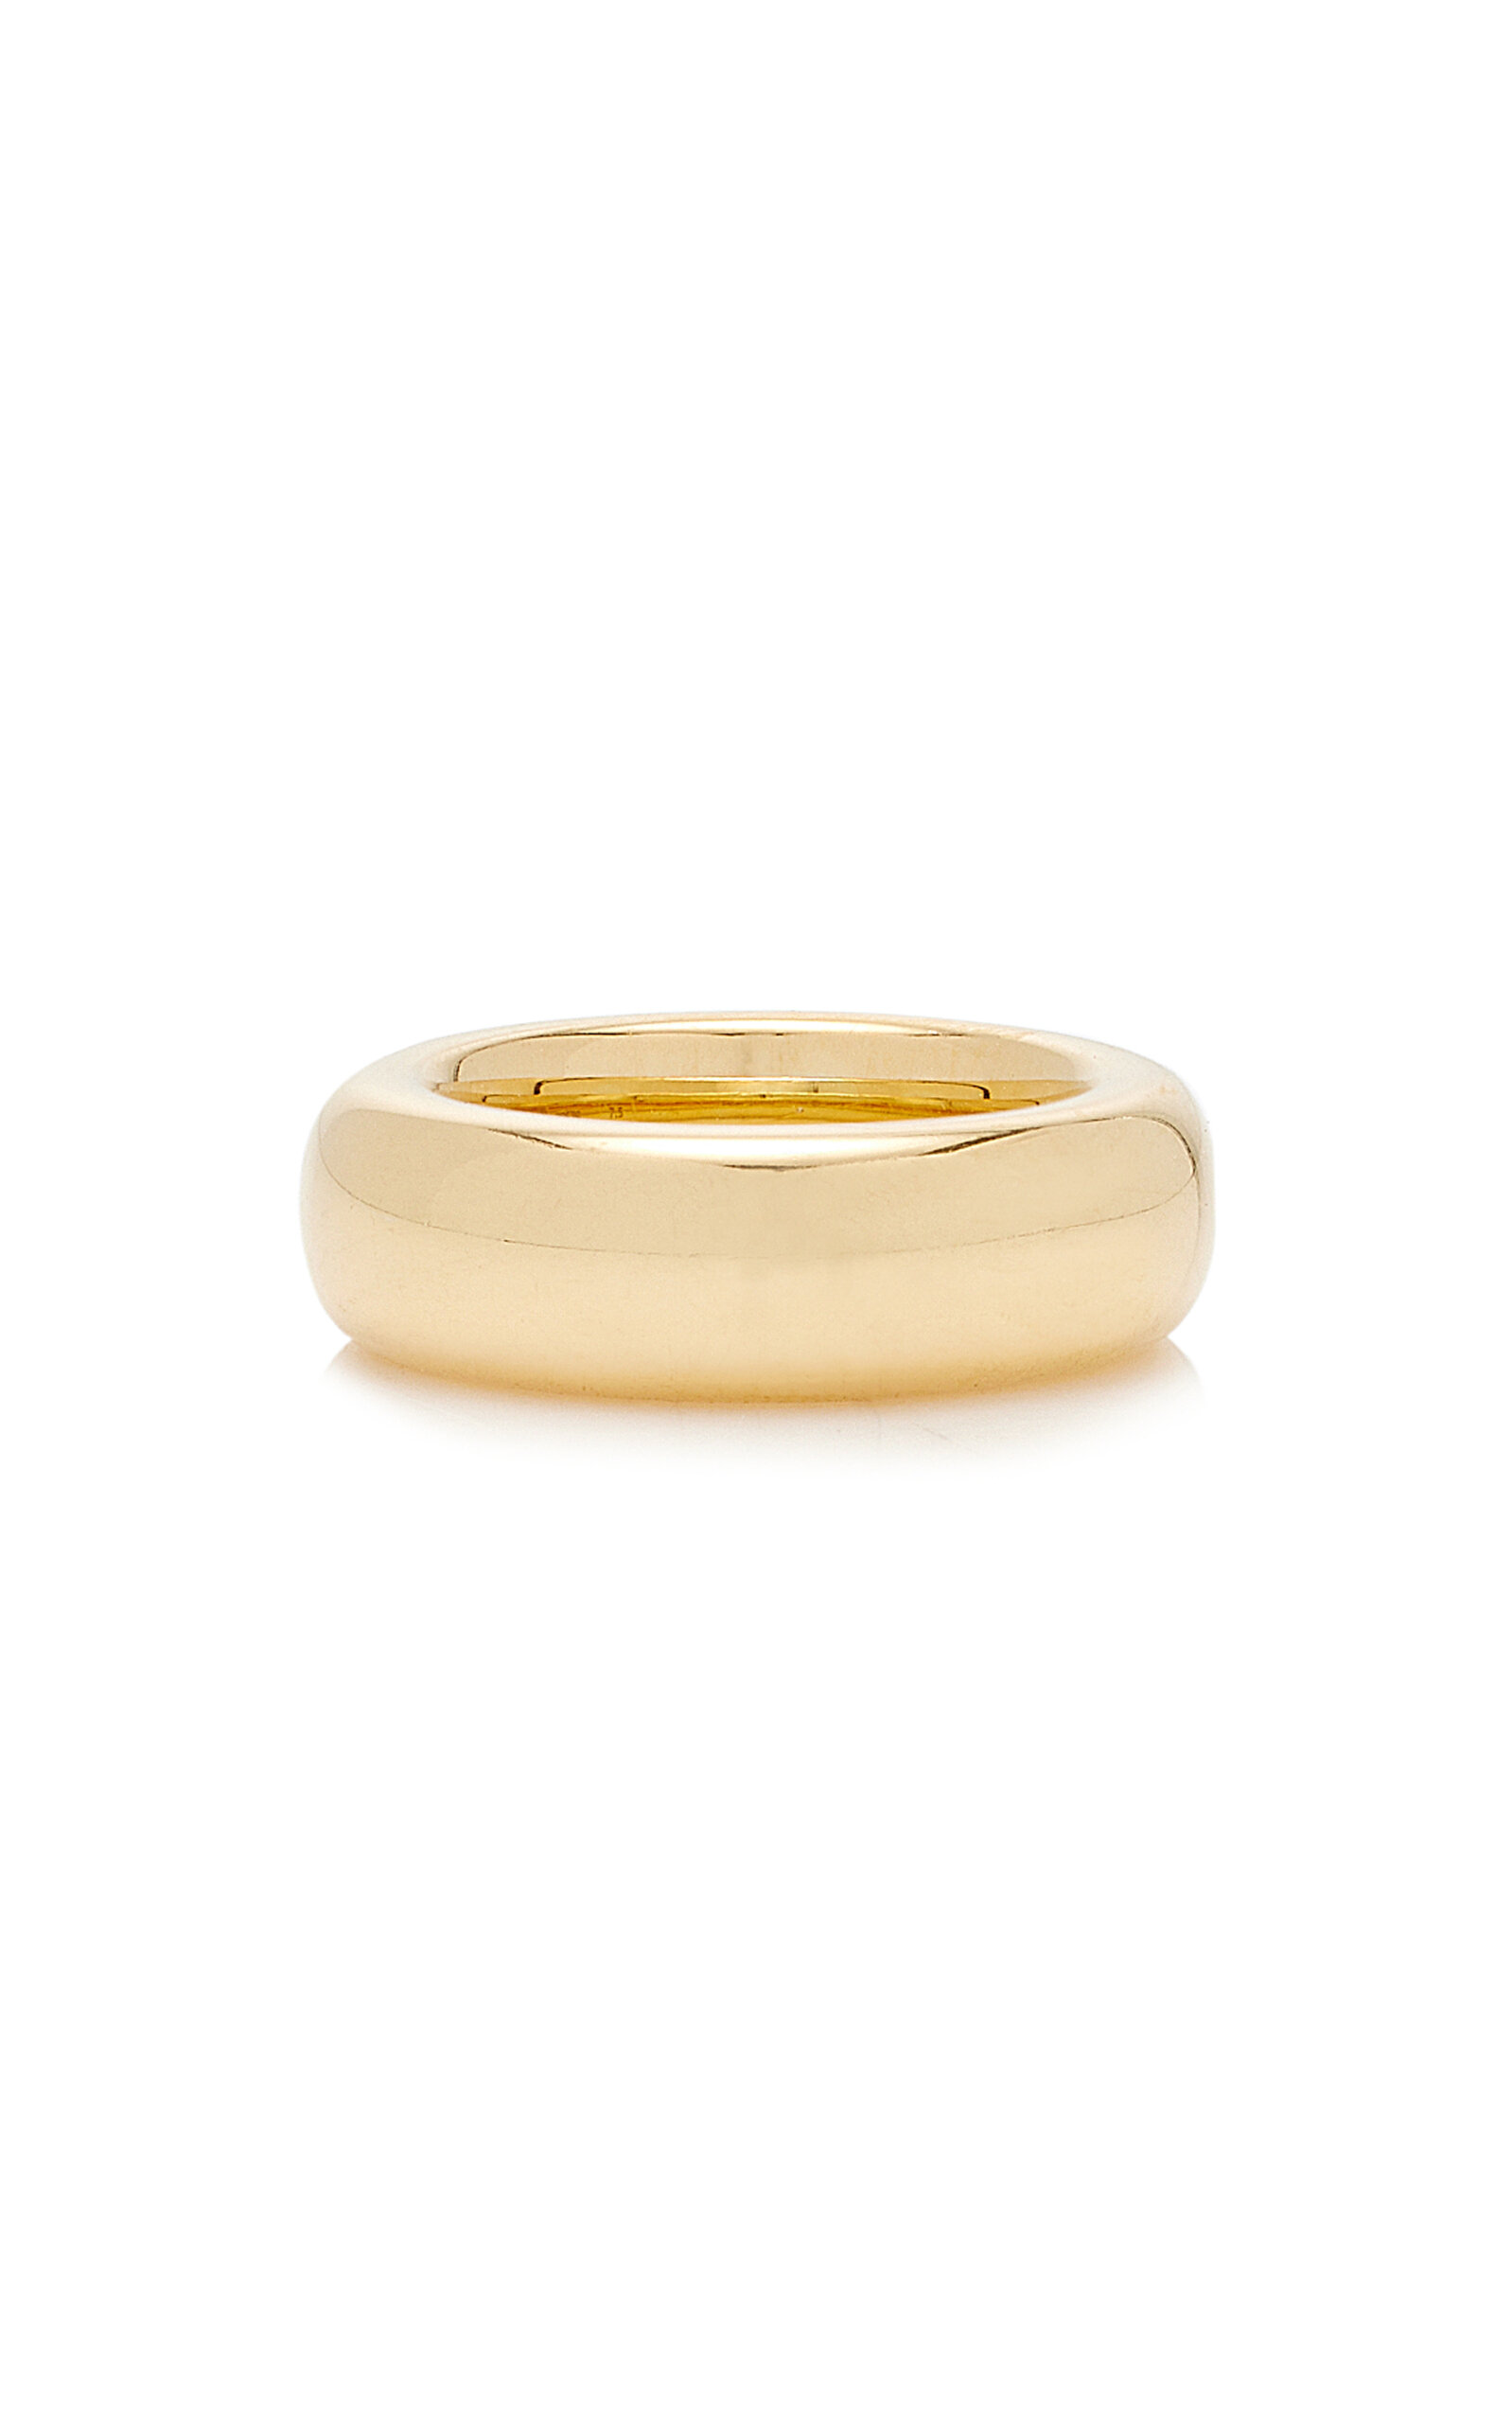 Briony Raymond Sloan 18K Yellow Gold Ring